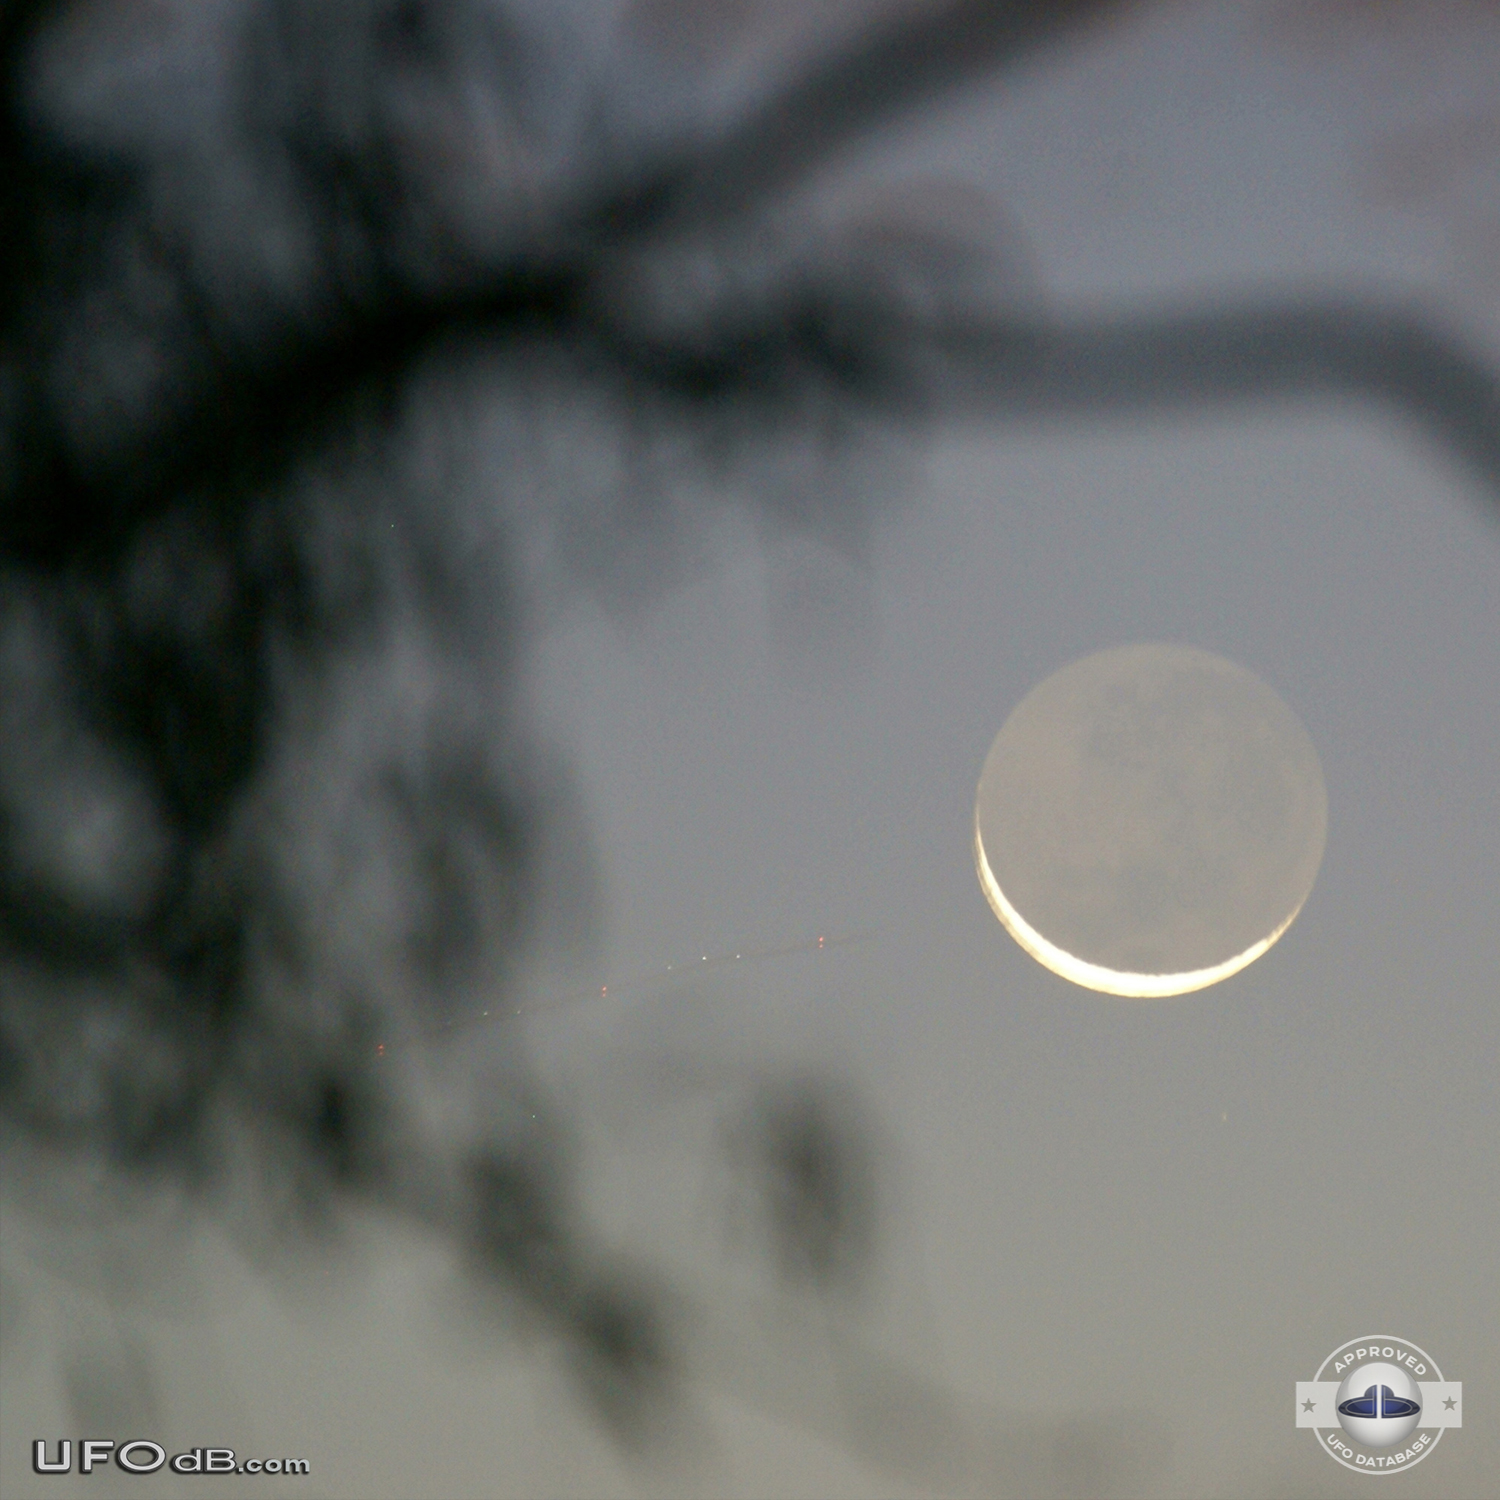 High quality Photo captures a Huge long UFO - Melbourne Australia 2009 UFO Picture #523-1